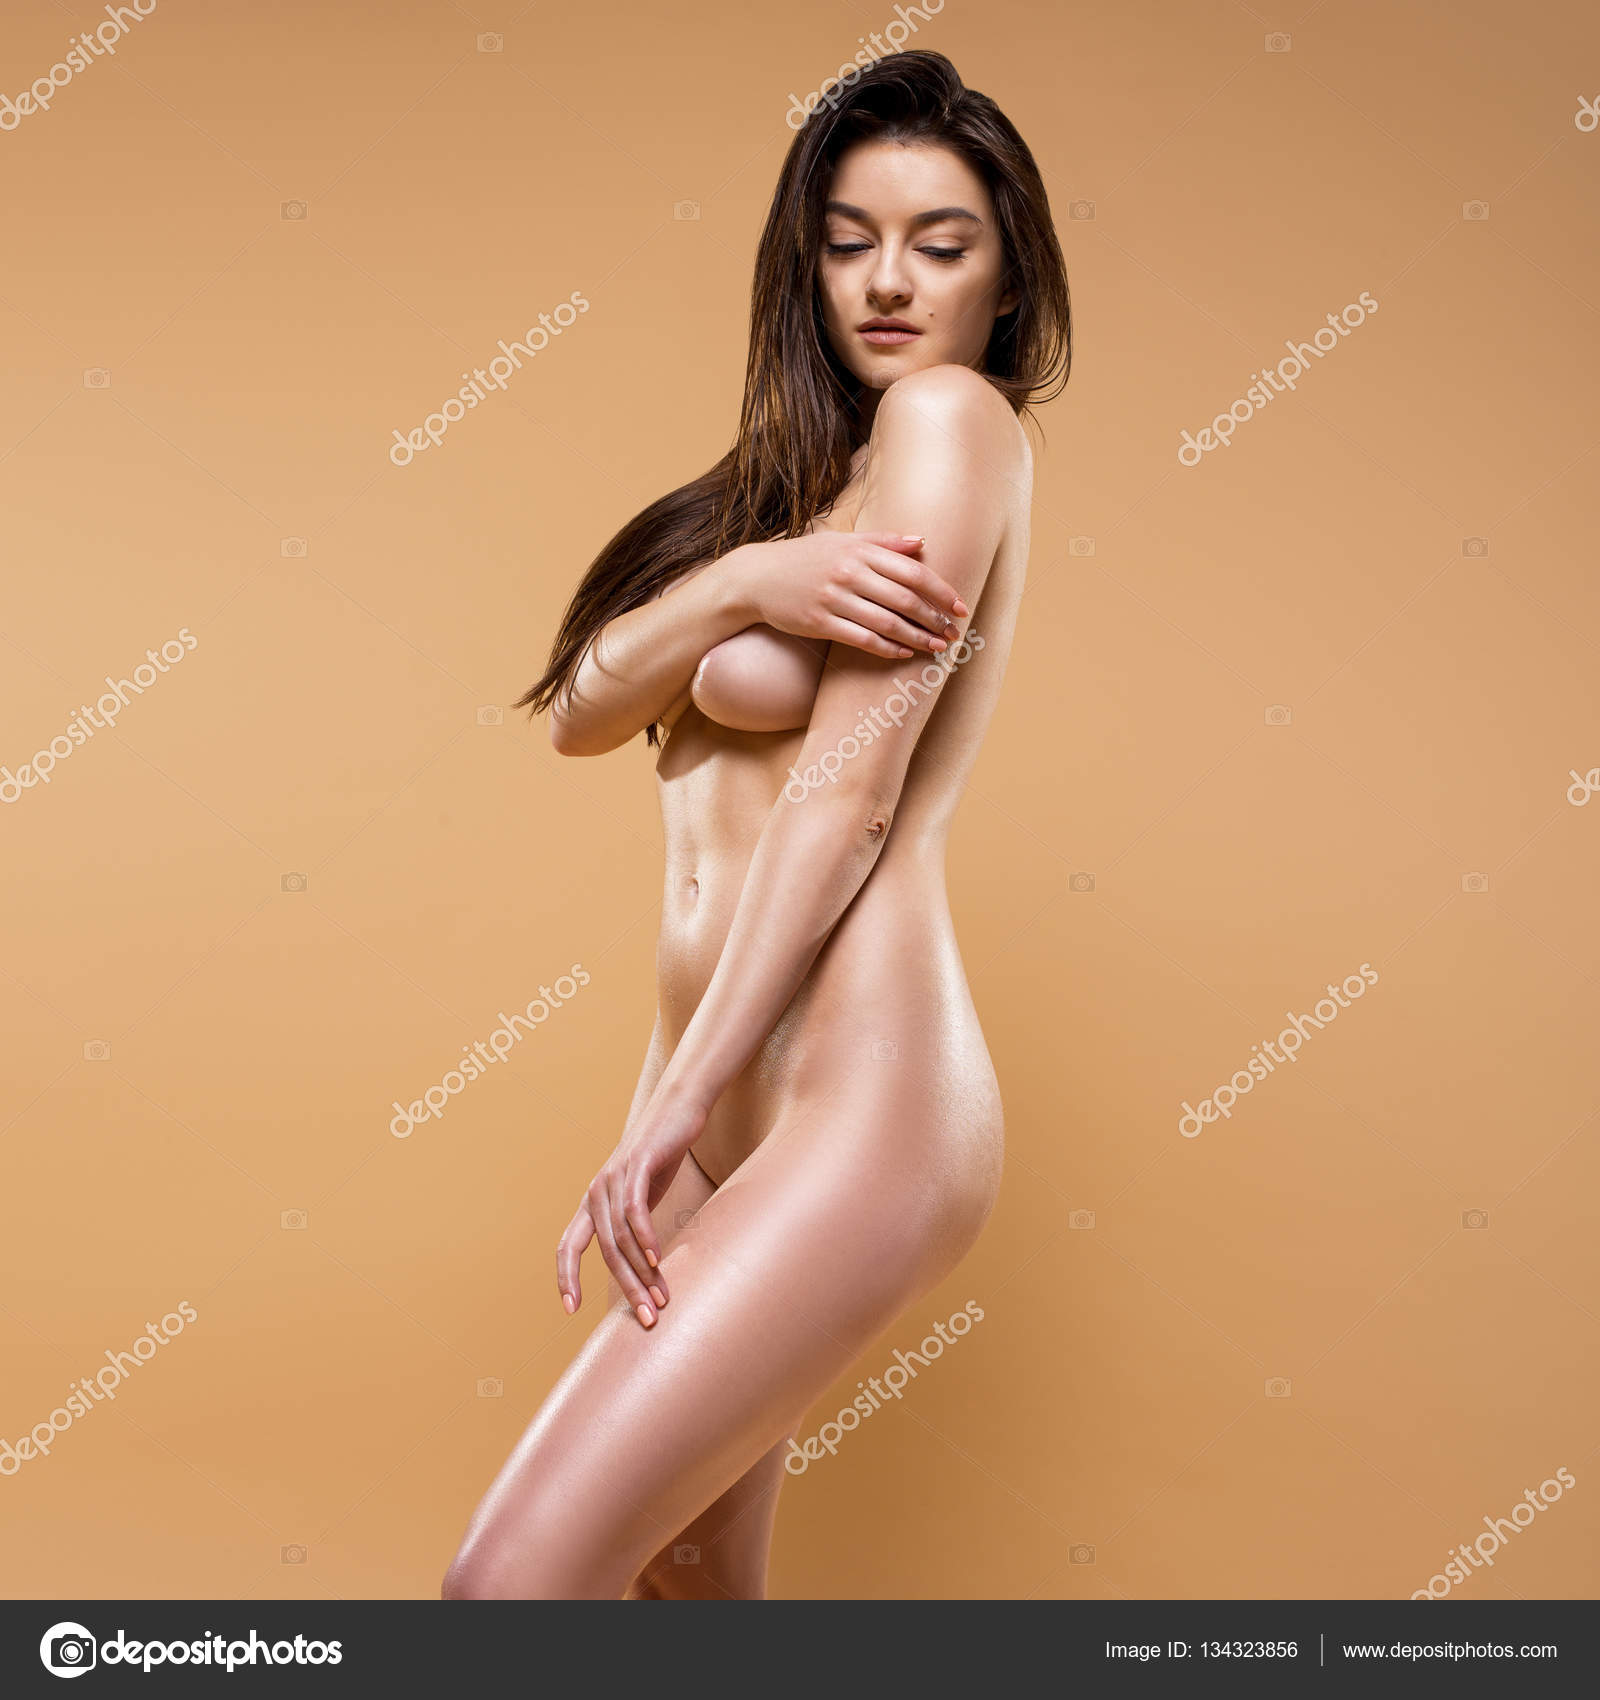 Woman posing naked